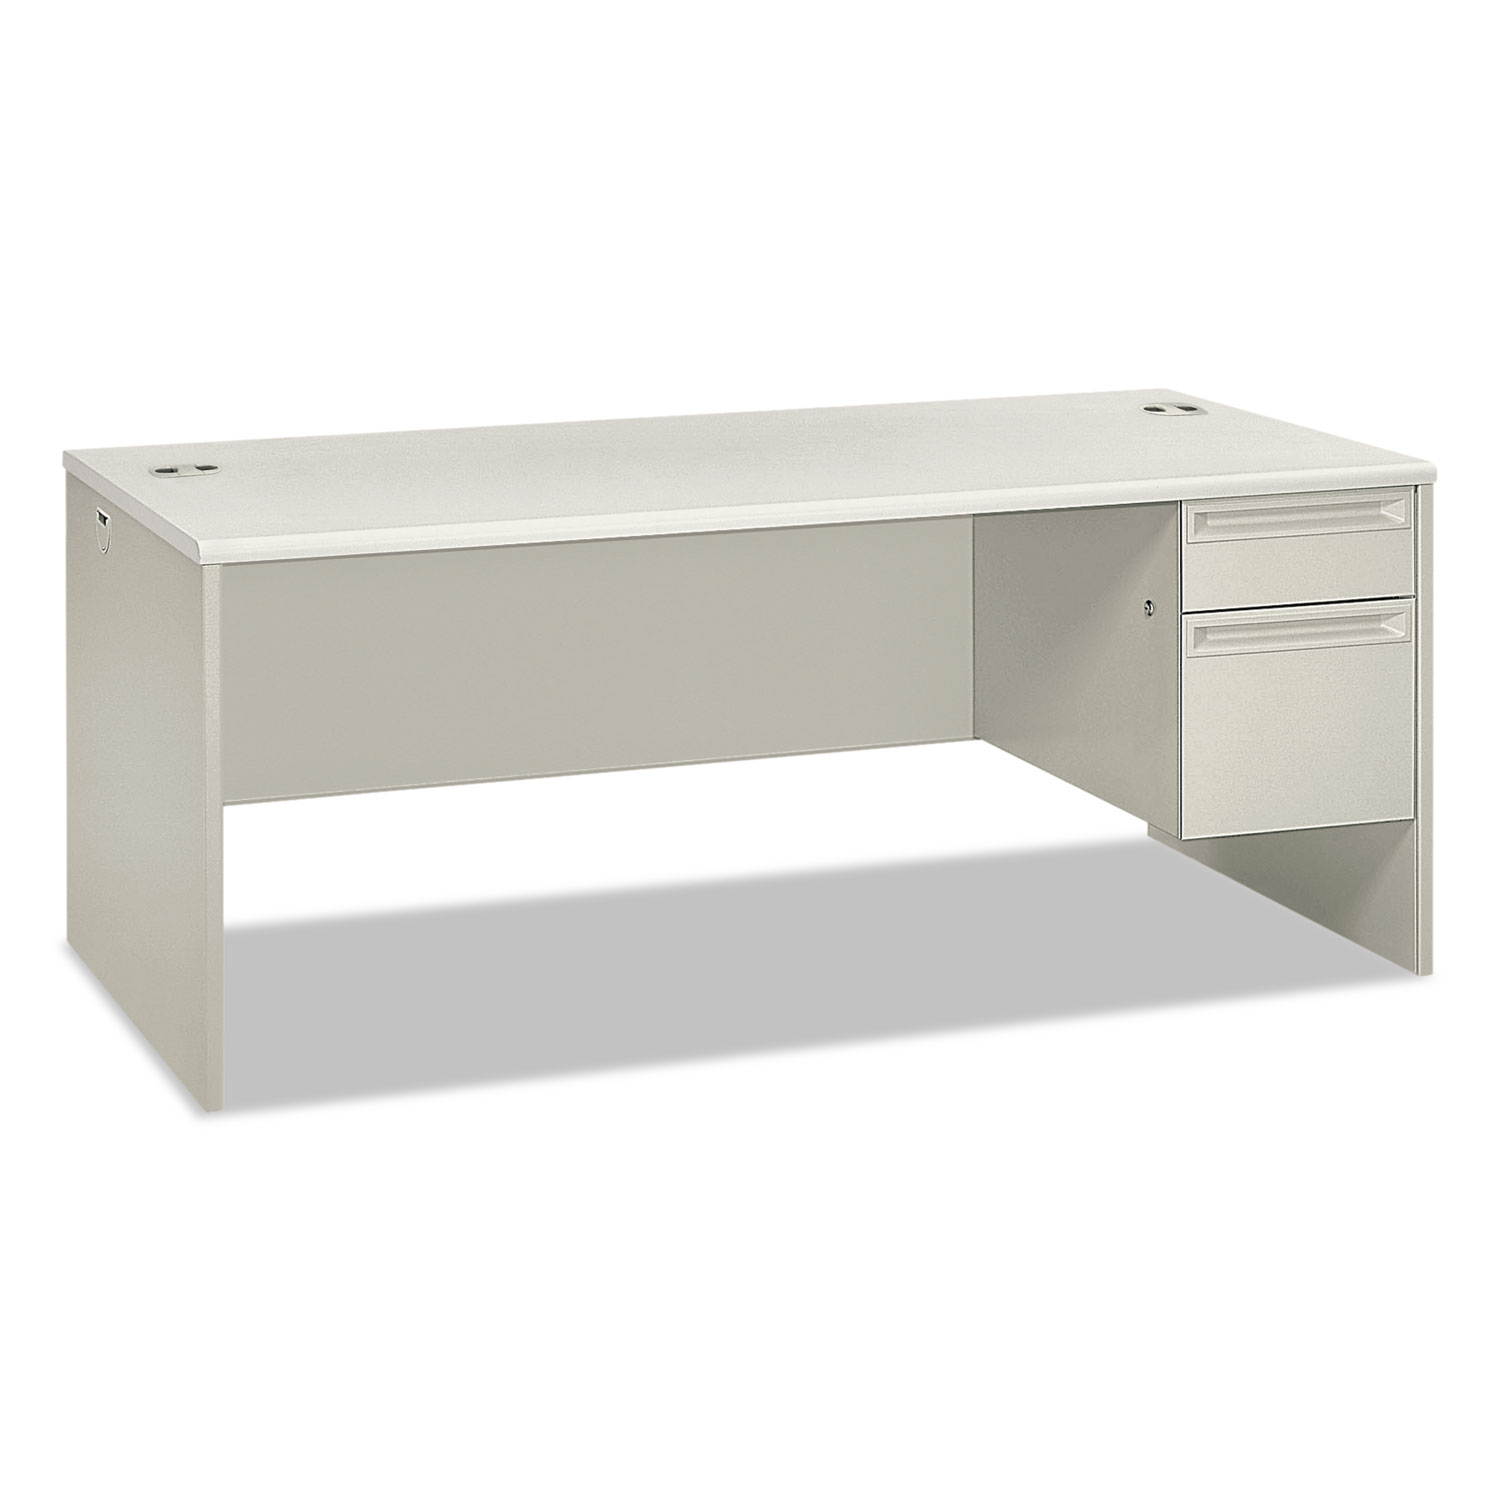  HON H38293R.B9.Q 38000 Series Single Pedestal Desk, Right, 72w x 36d x 30h, Silver Mesh/Light Gray (HON38293RB9Q) 